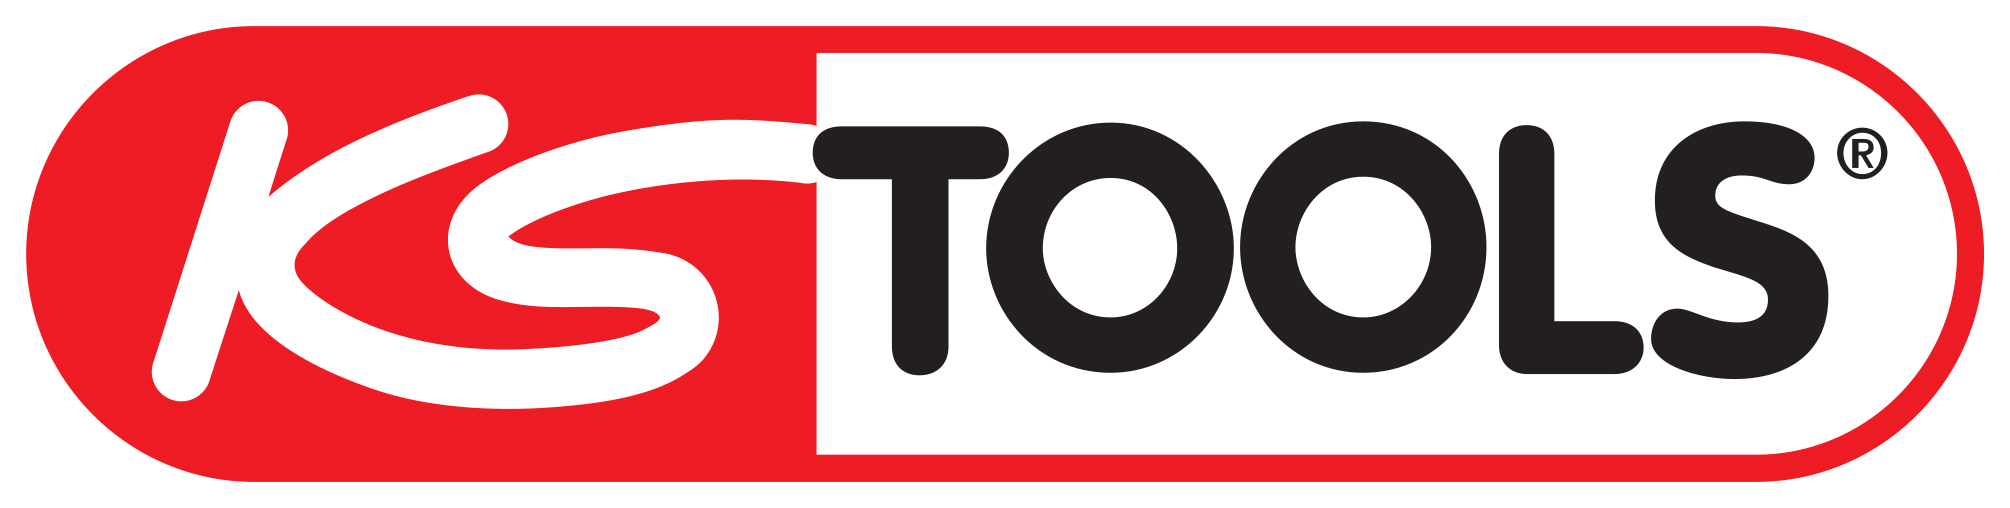 GARAGE MACIOTTA - logo KS Tools